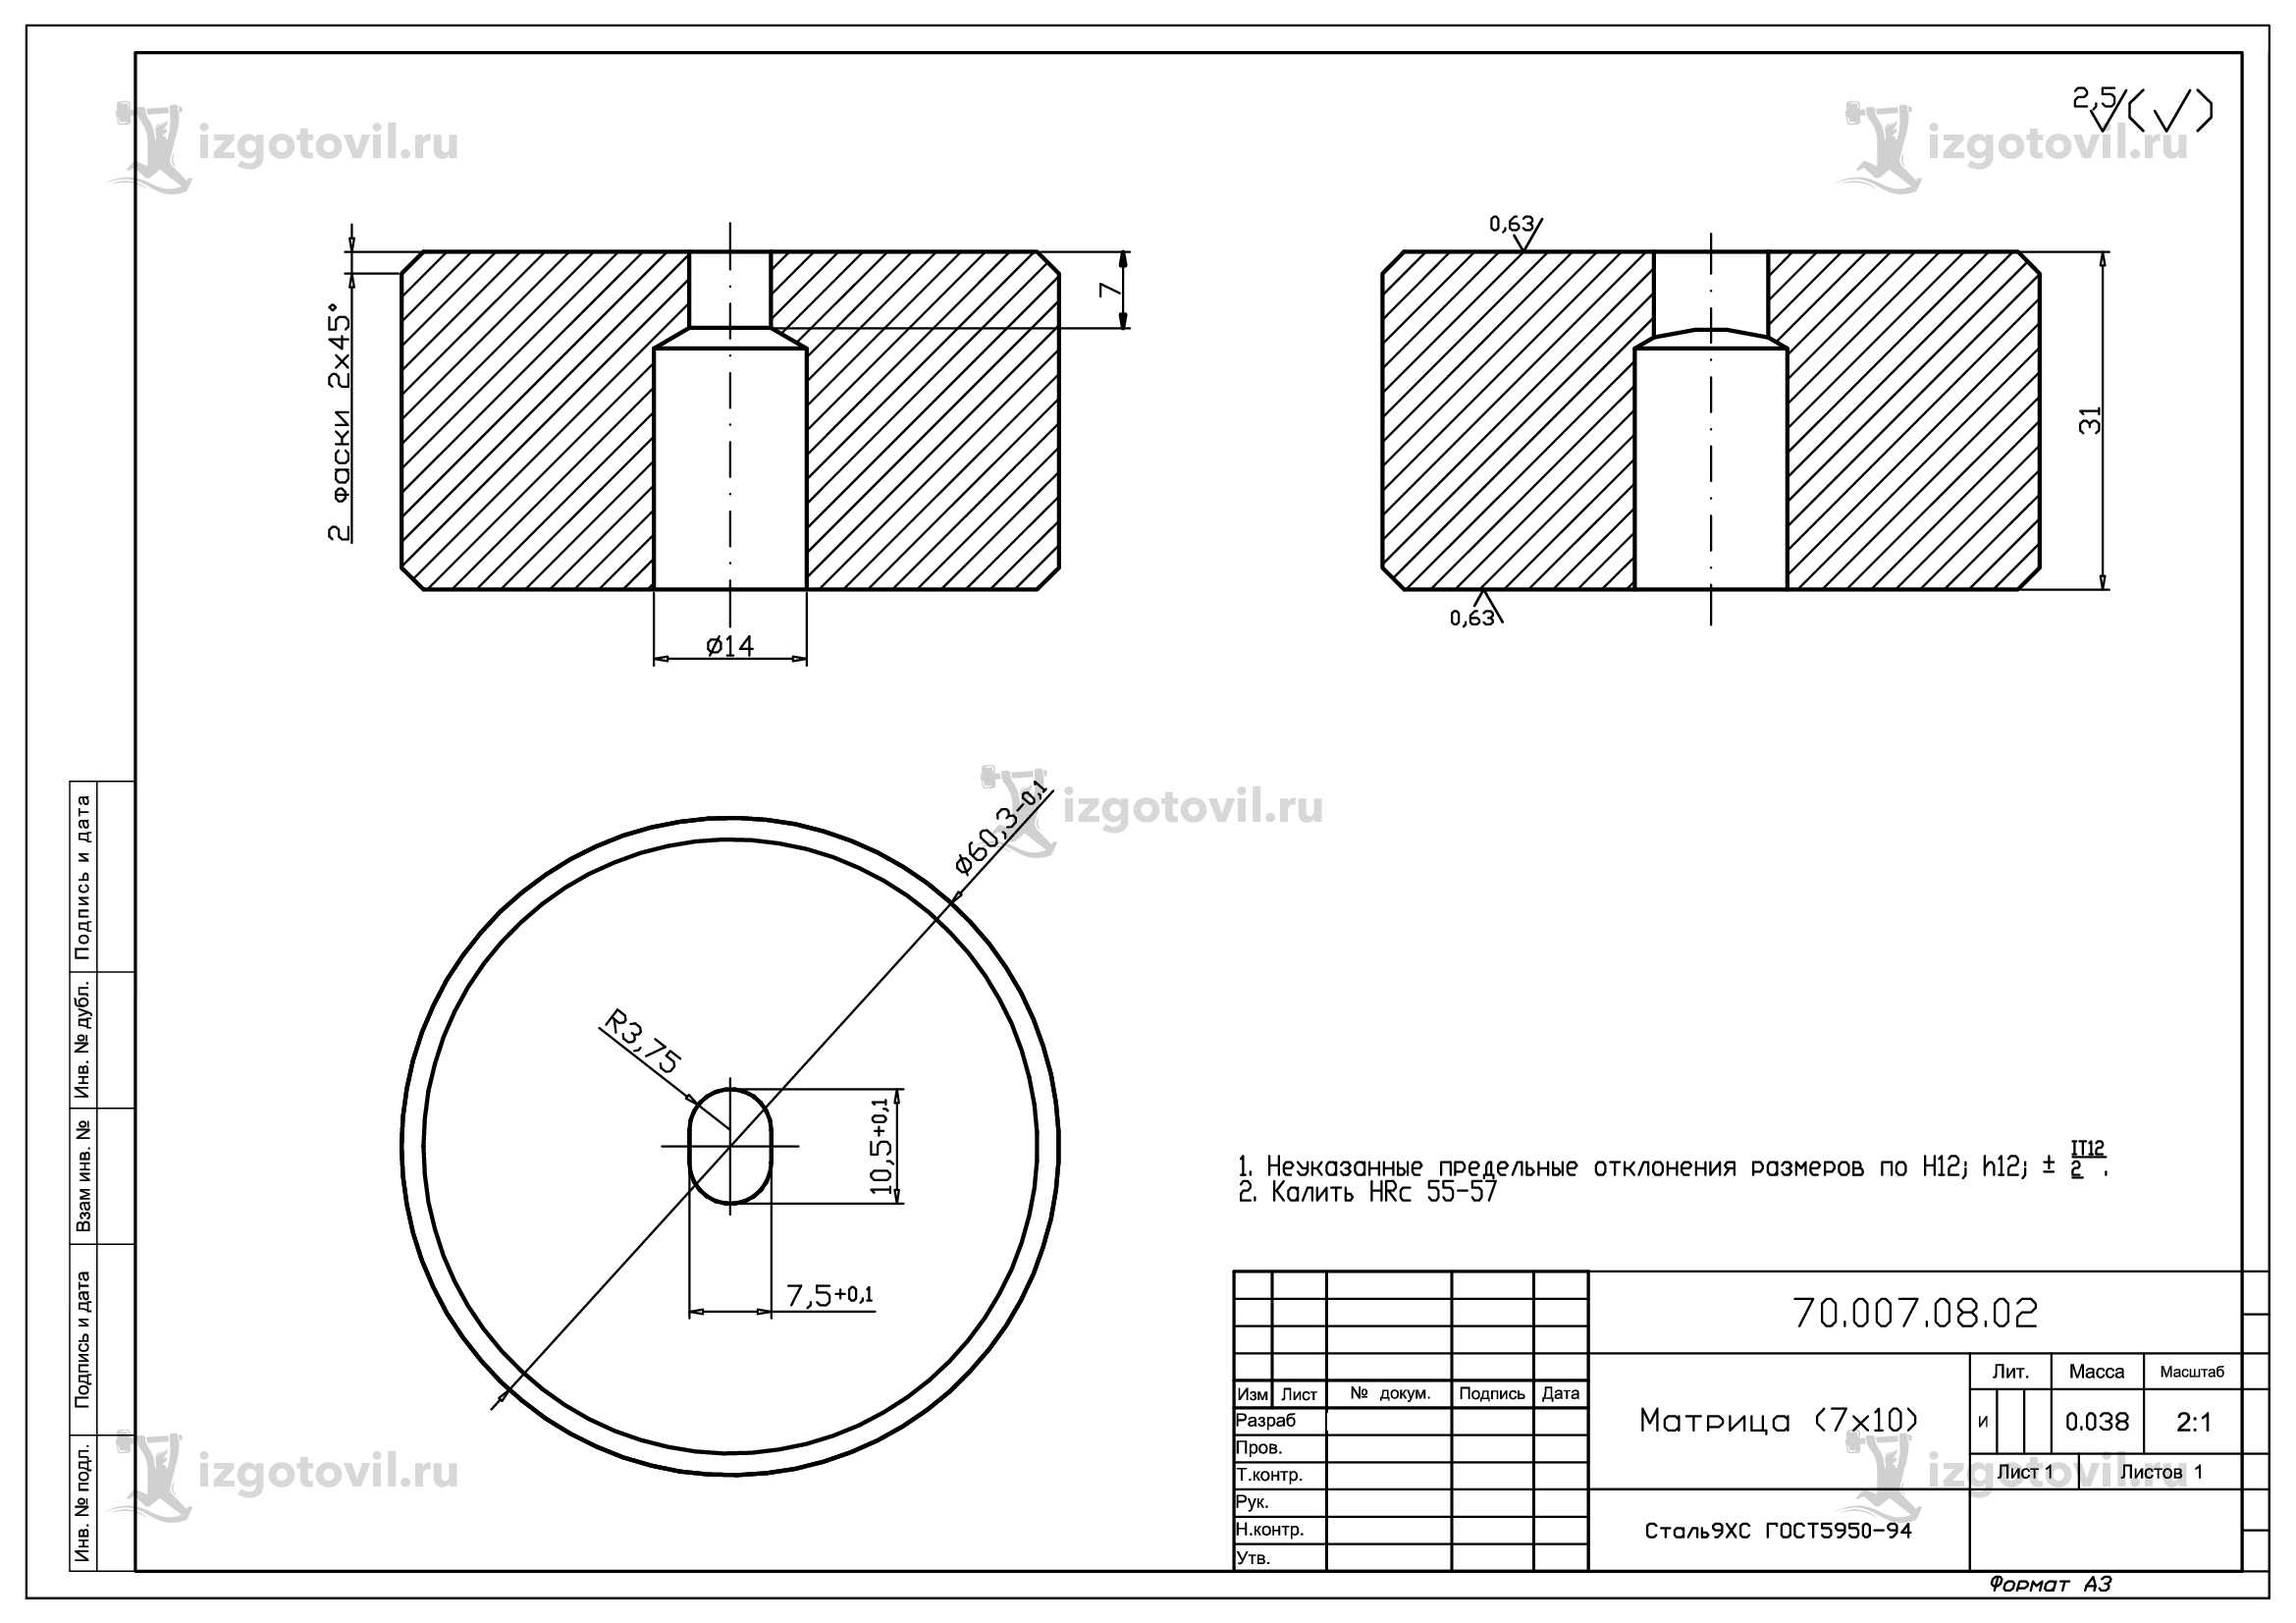 Токарно-фрезерная обработка: изготовление пуансон и матриц